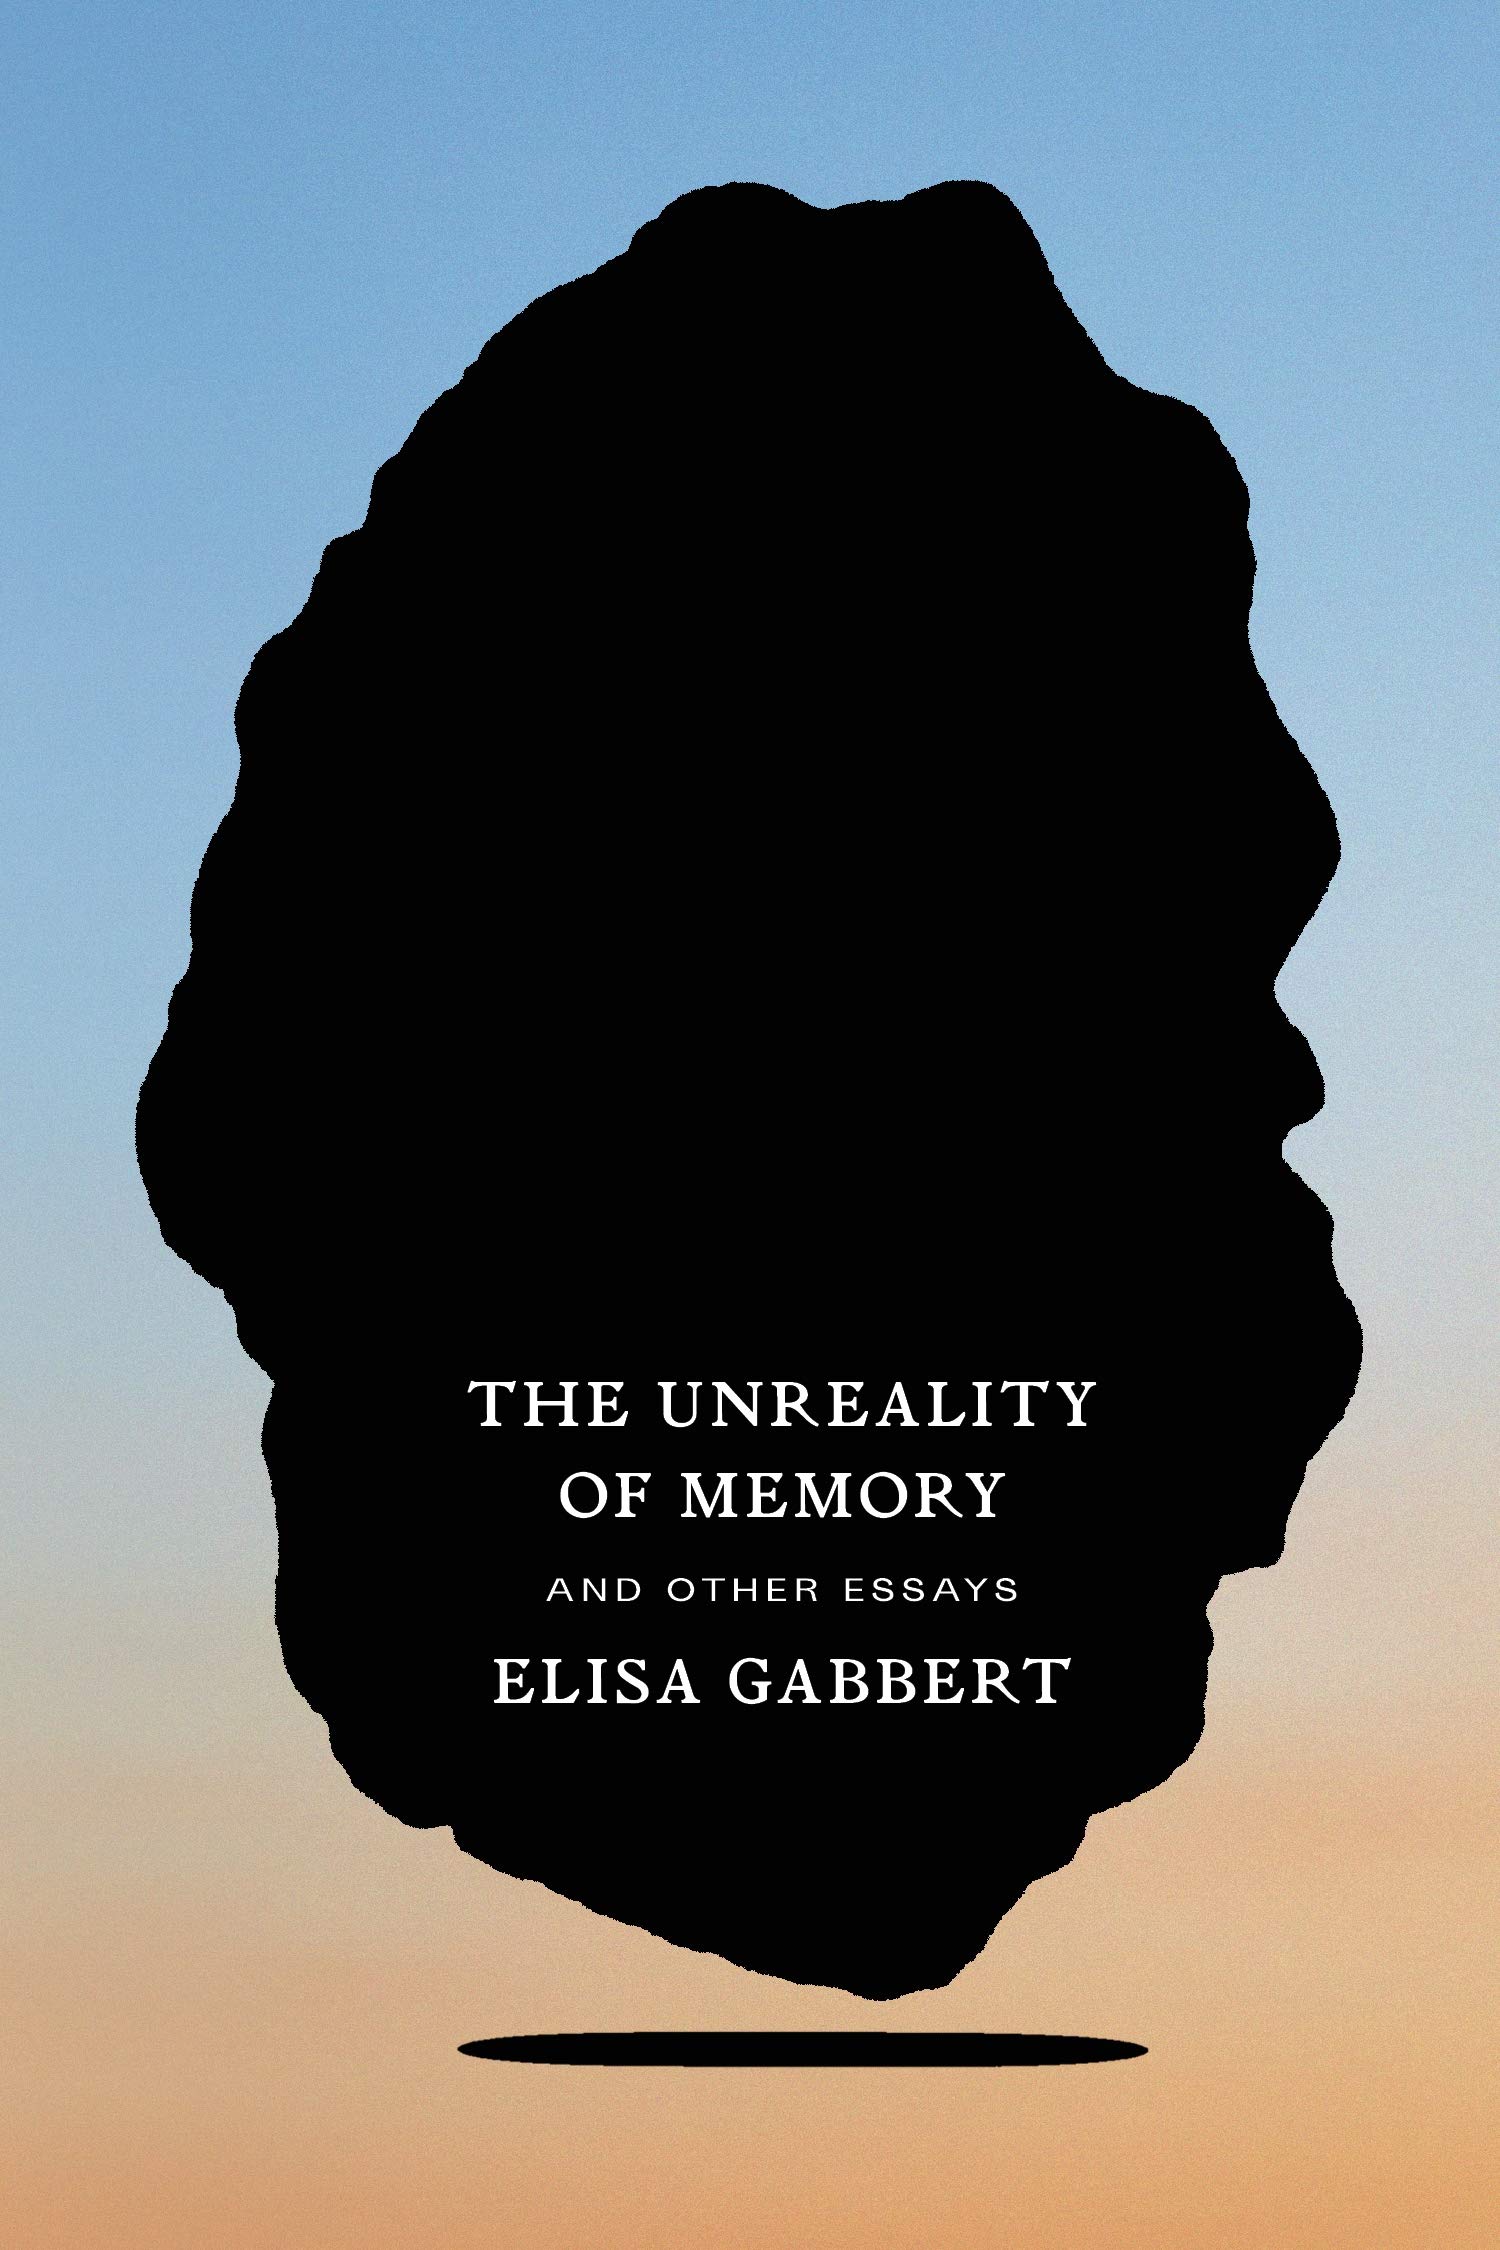 The Unreality of Memory by Elisa Gabbert